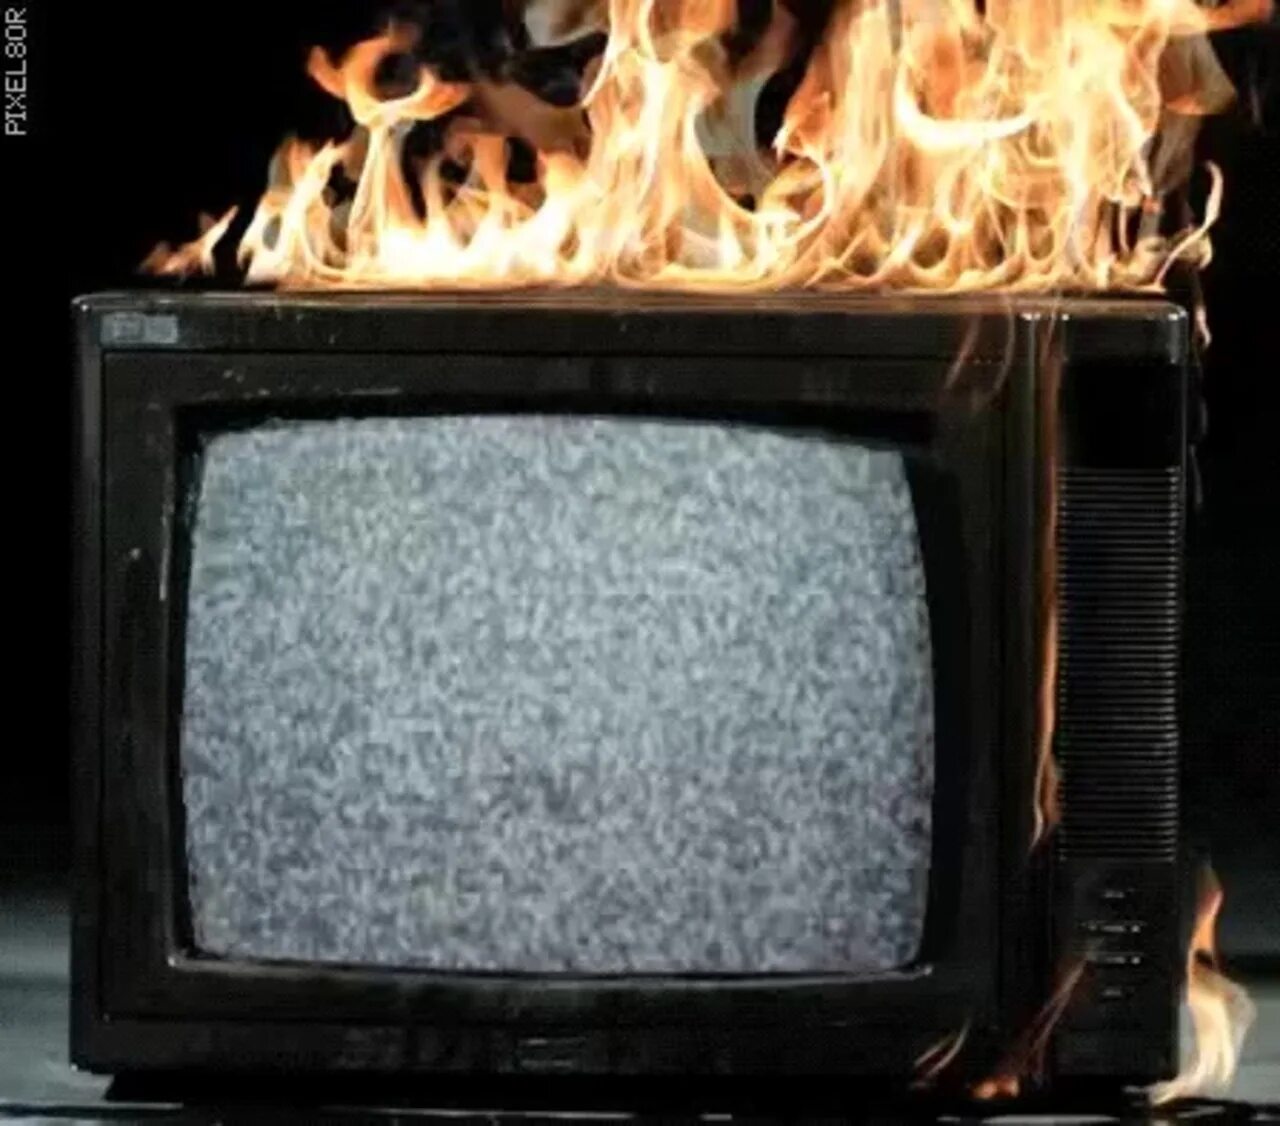 Горящий телевизор. Старый телевизор. Возгорание телевизора. Старый телевизор в огне. Сгоревший экран